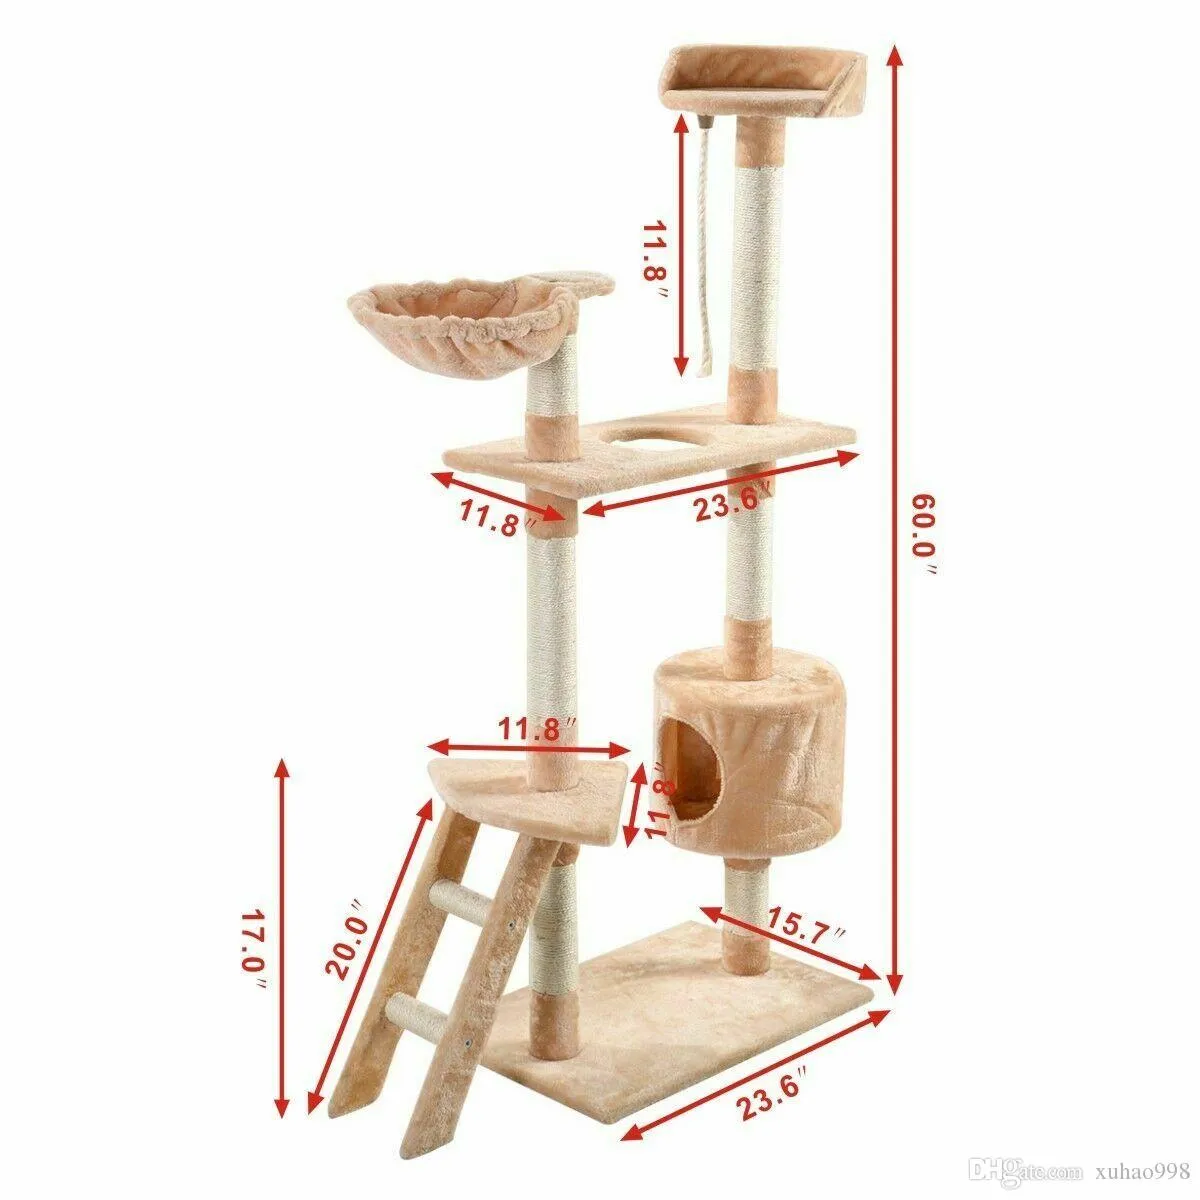 60 tum Kitten Pet House Hammock Cat Tree Tower Condo Scratcher Furniture Tool2730